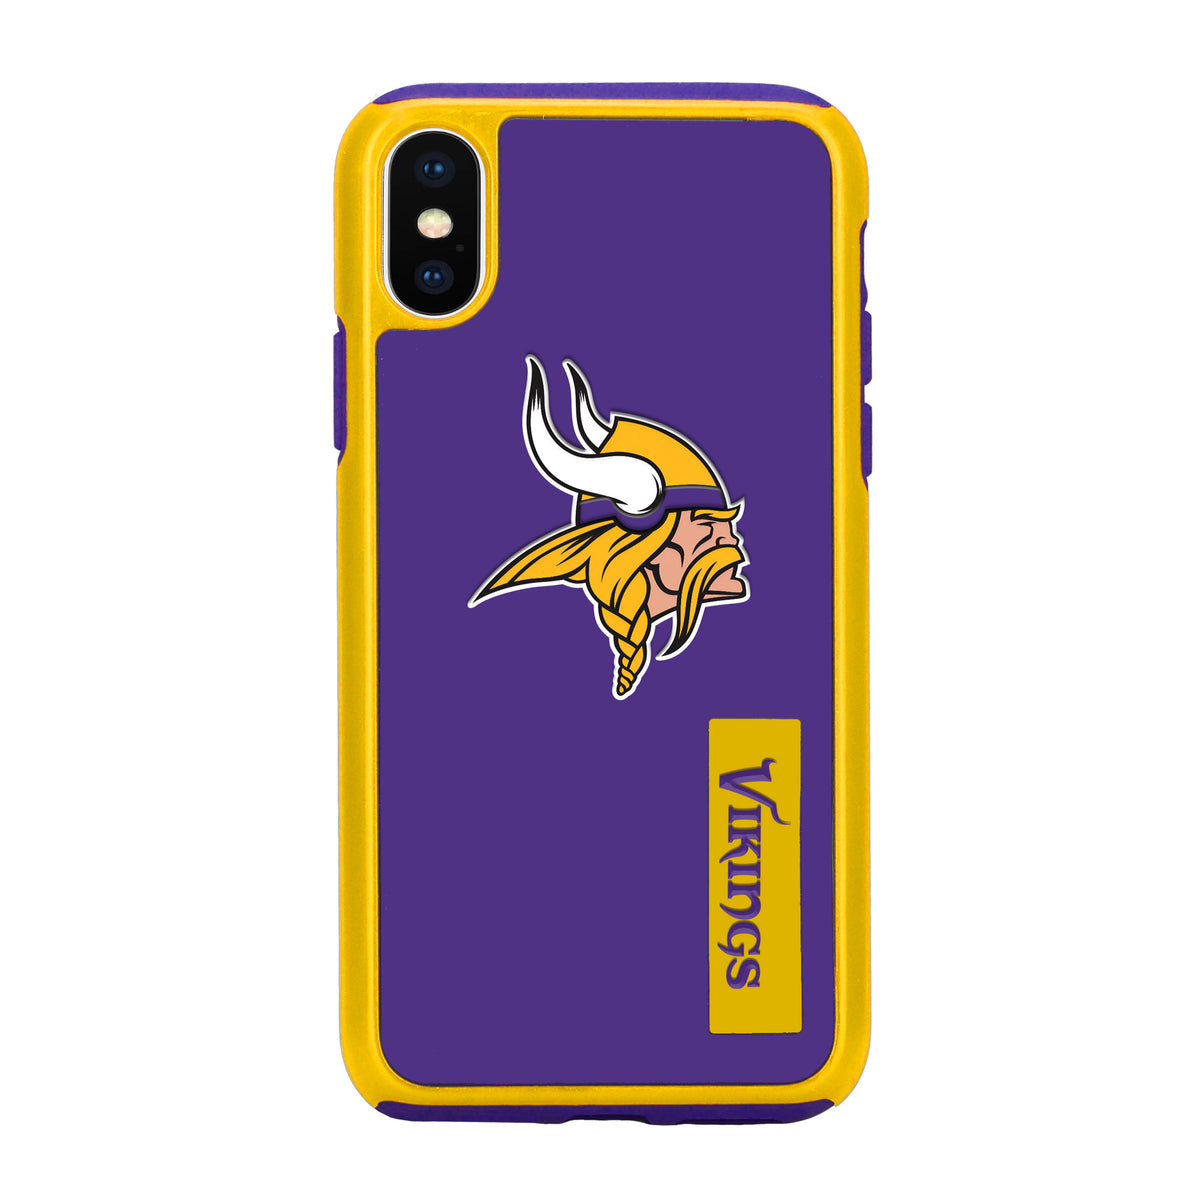 iPhone X / XS Licensed Team Case Impact NFL Minnesota Vikings